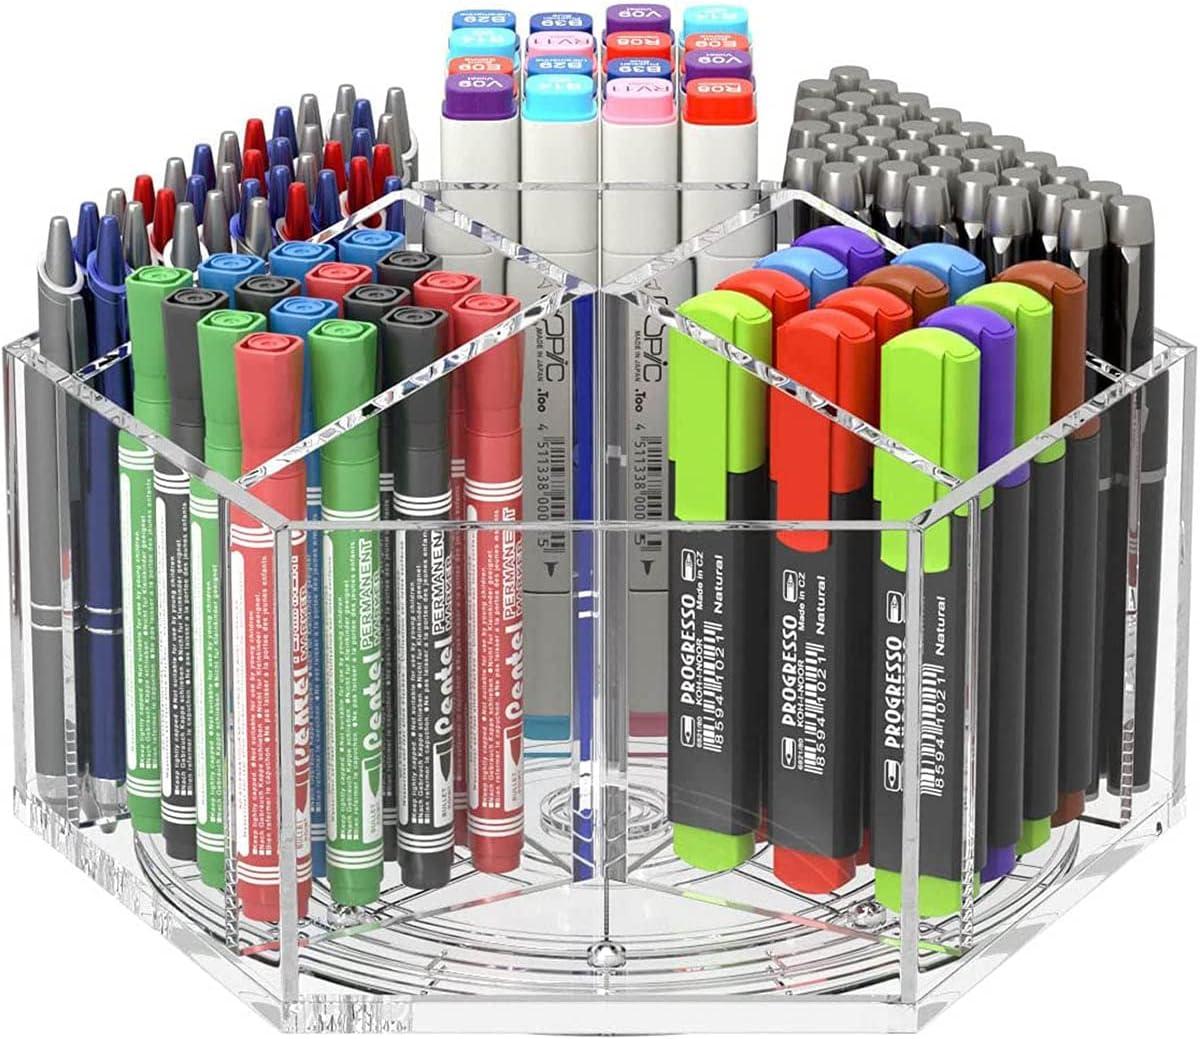 niubee acrylic pen holder desk organizer 360 rotatable  niubee b08r9n5w8b